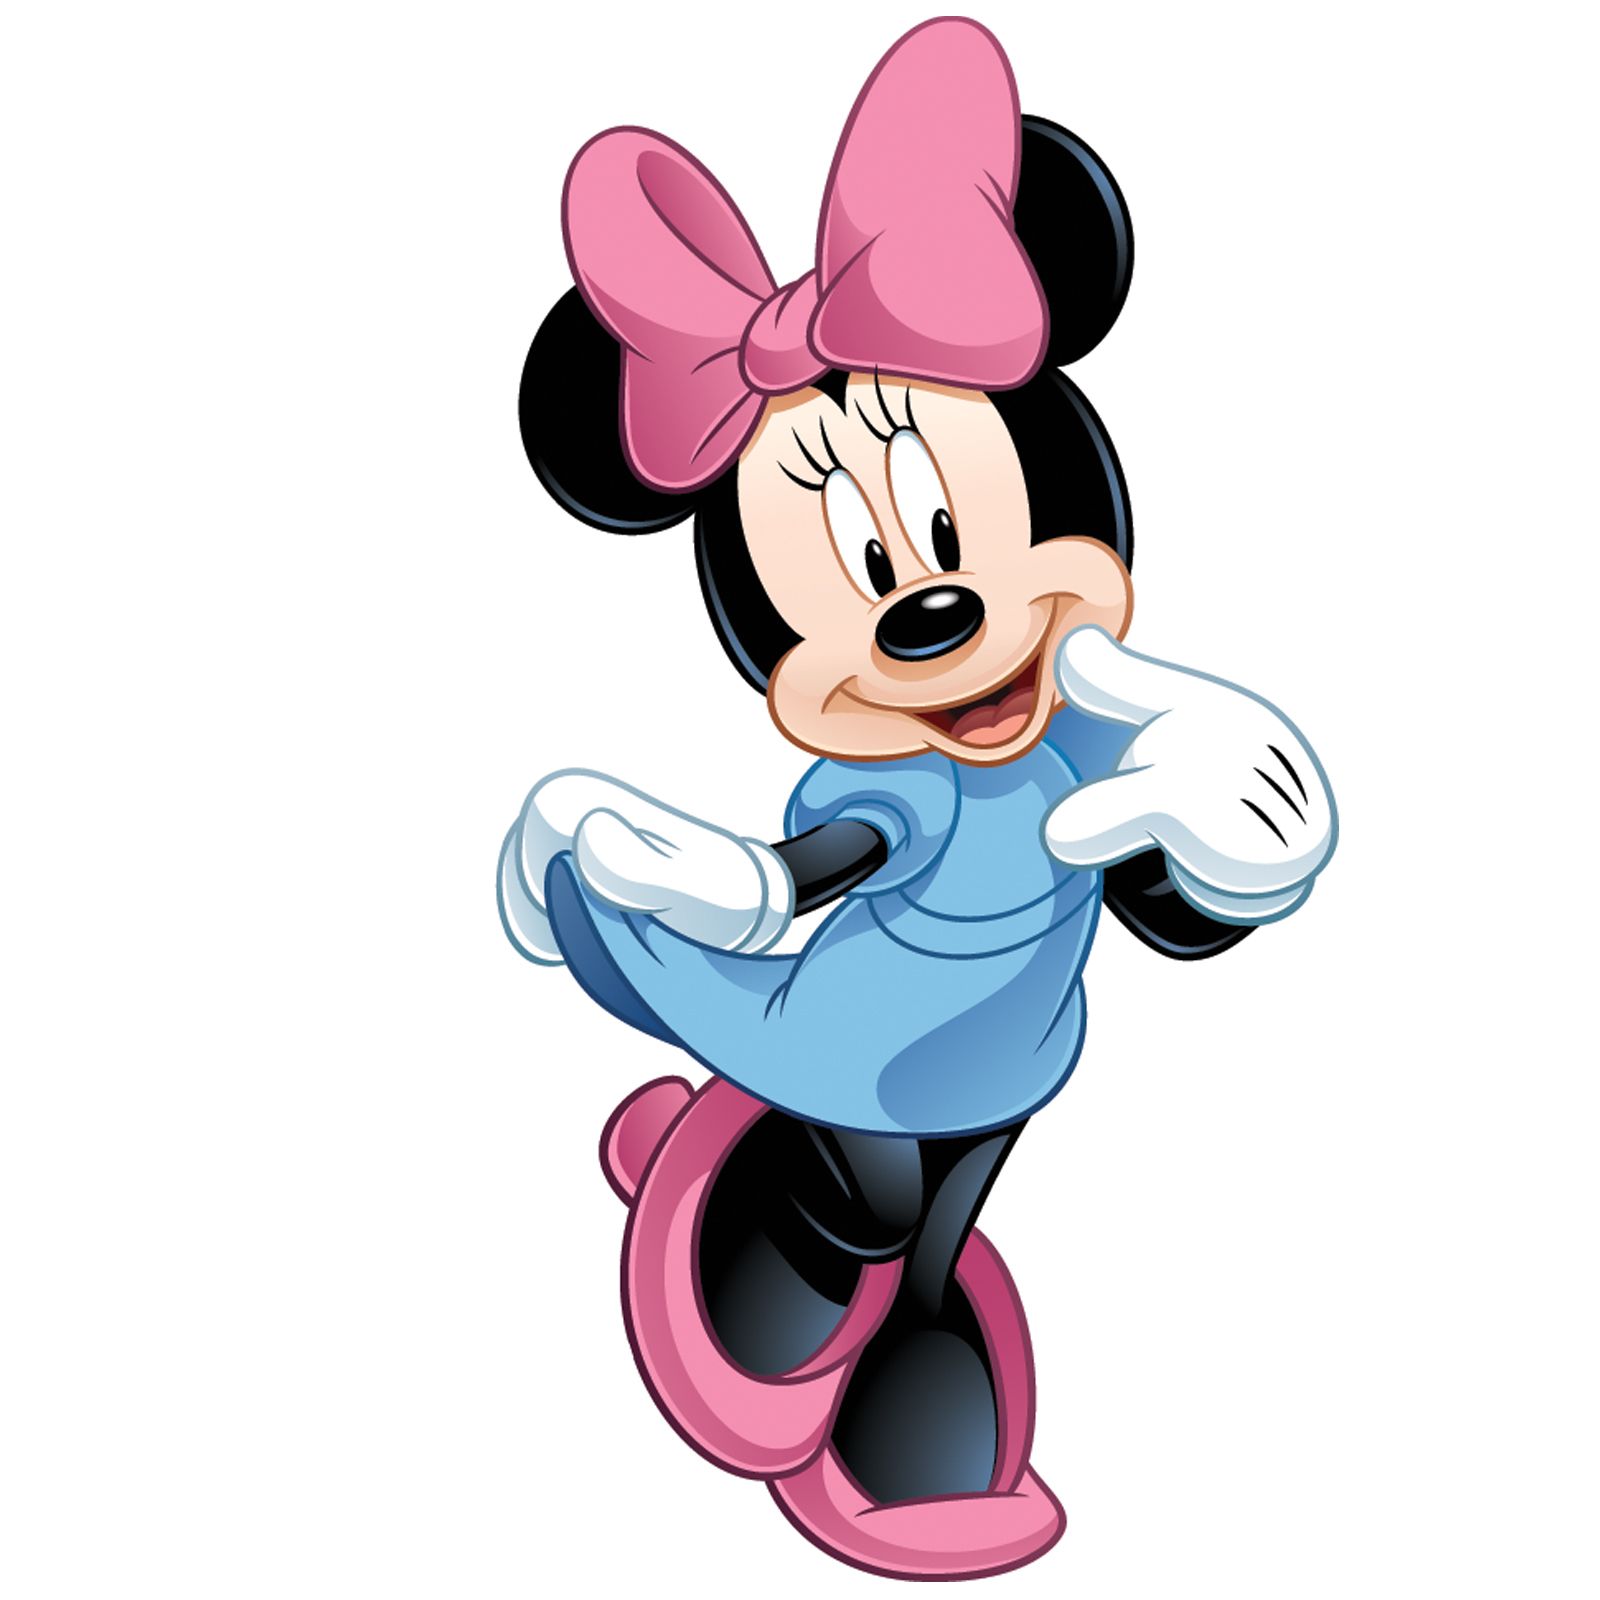 Of Minnie Mouse Wallpaper Image para PC - Dibujos animados Fondos de pantalla